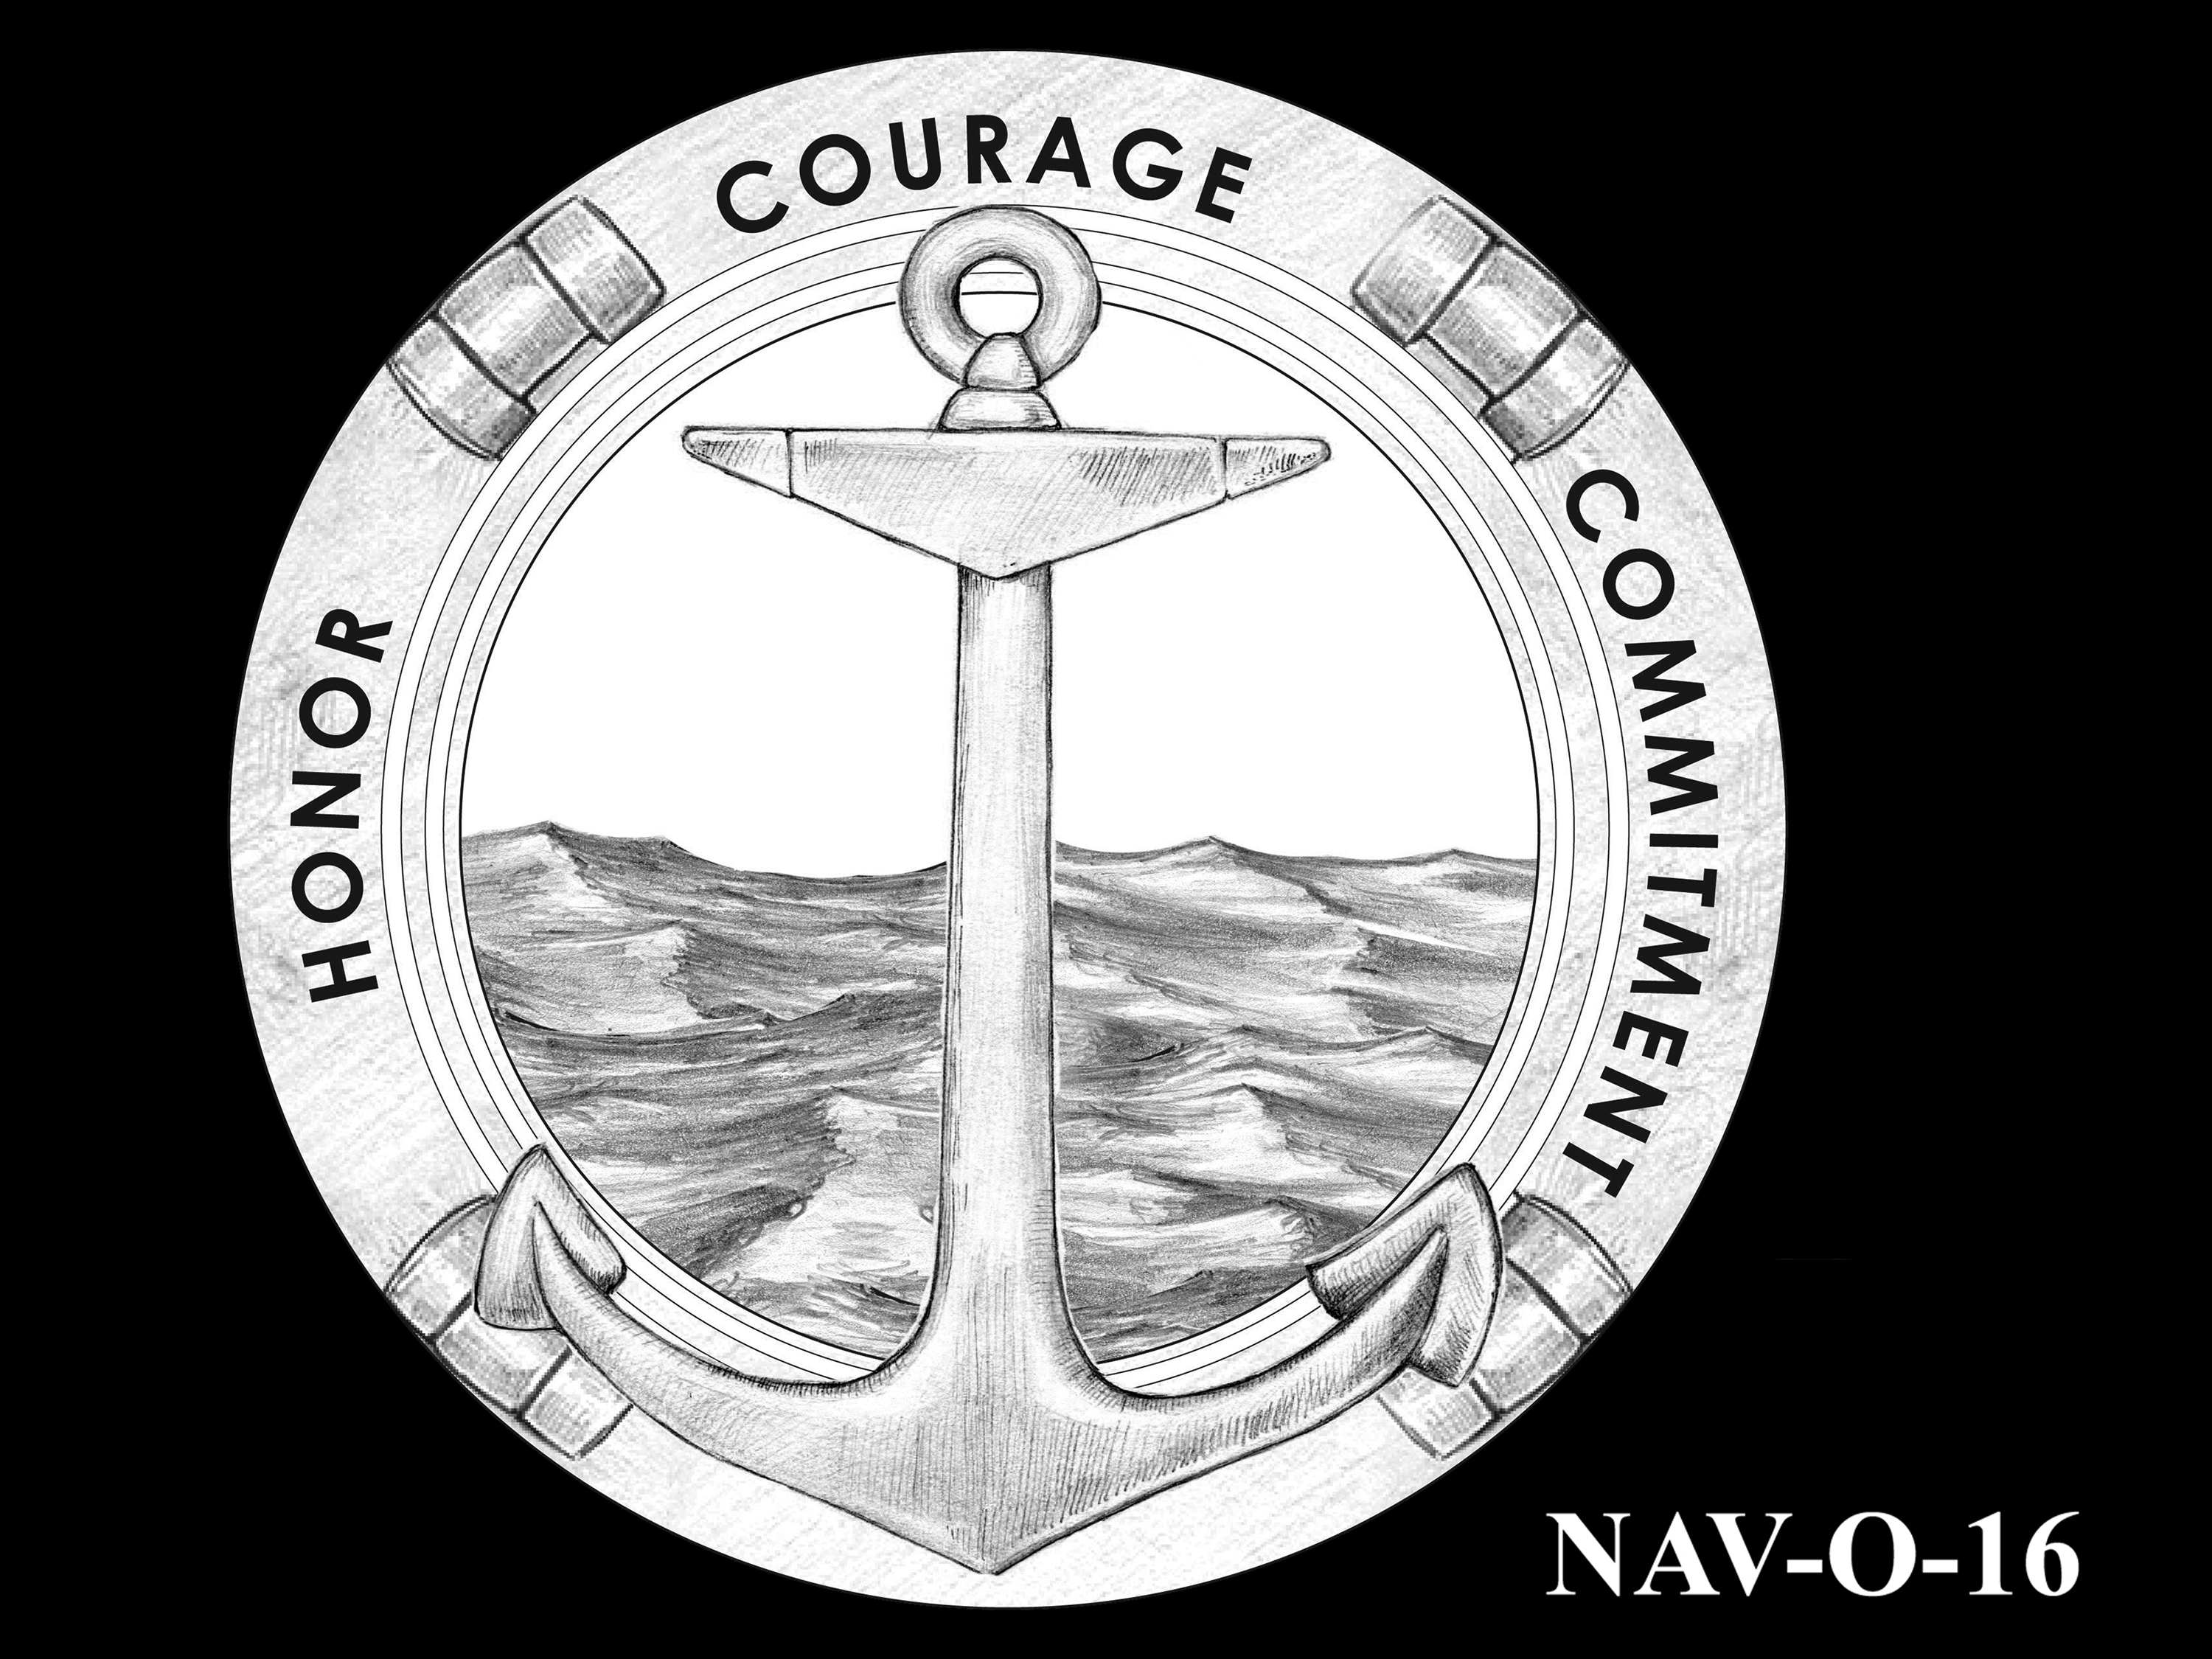 NAV-O-16 -- 2021 United States Navy Silver Medal  - Obverse